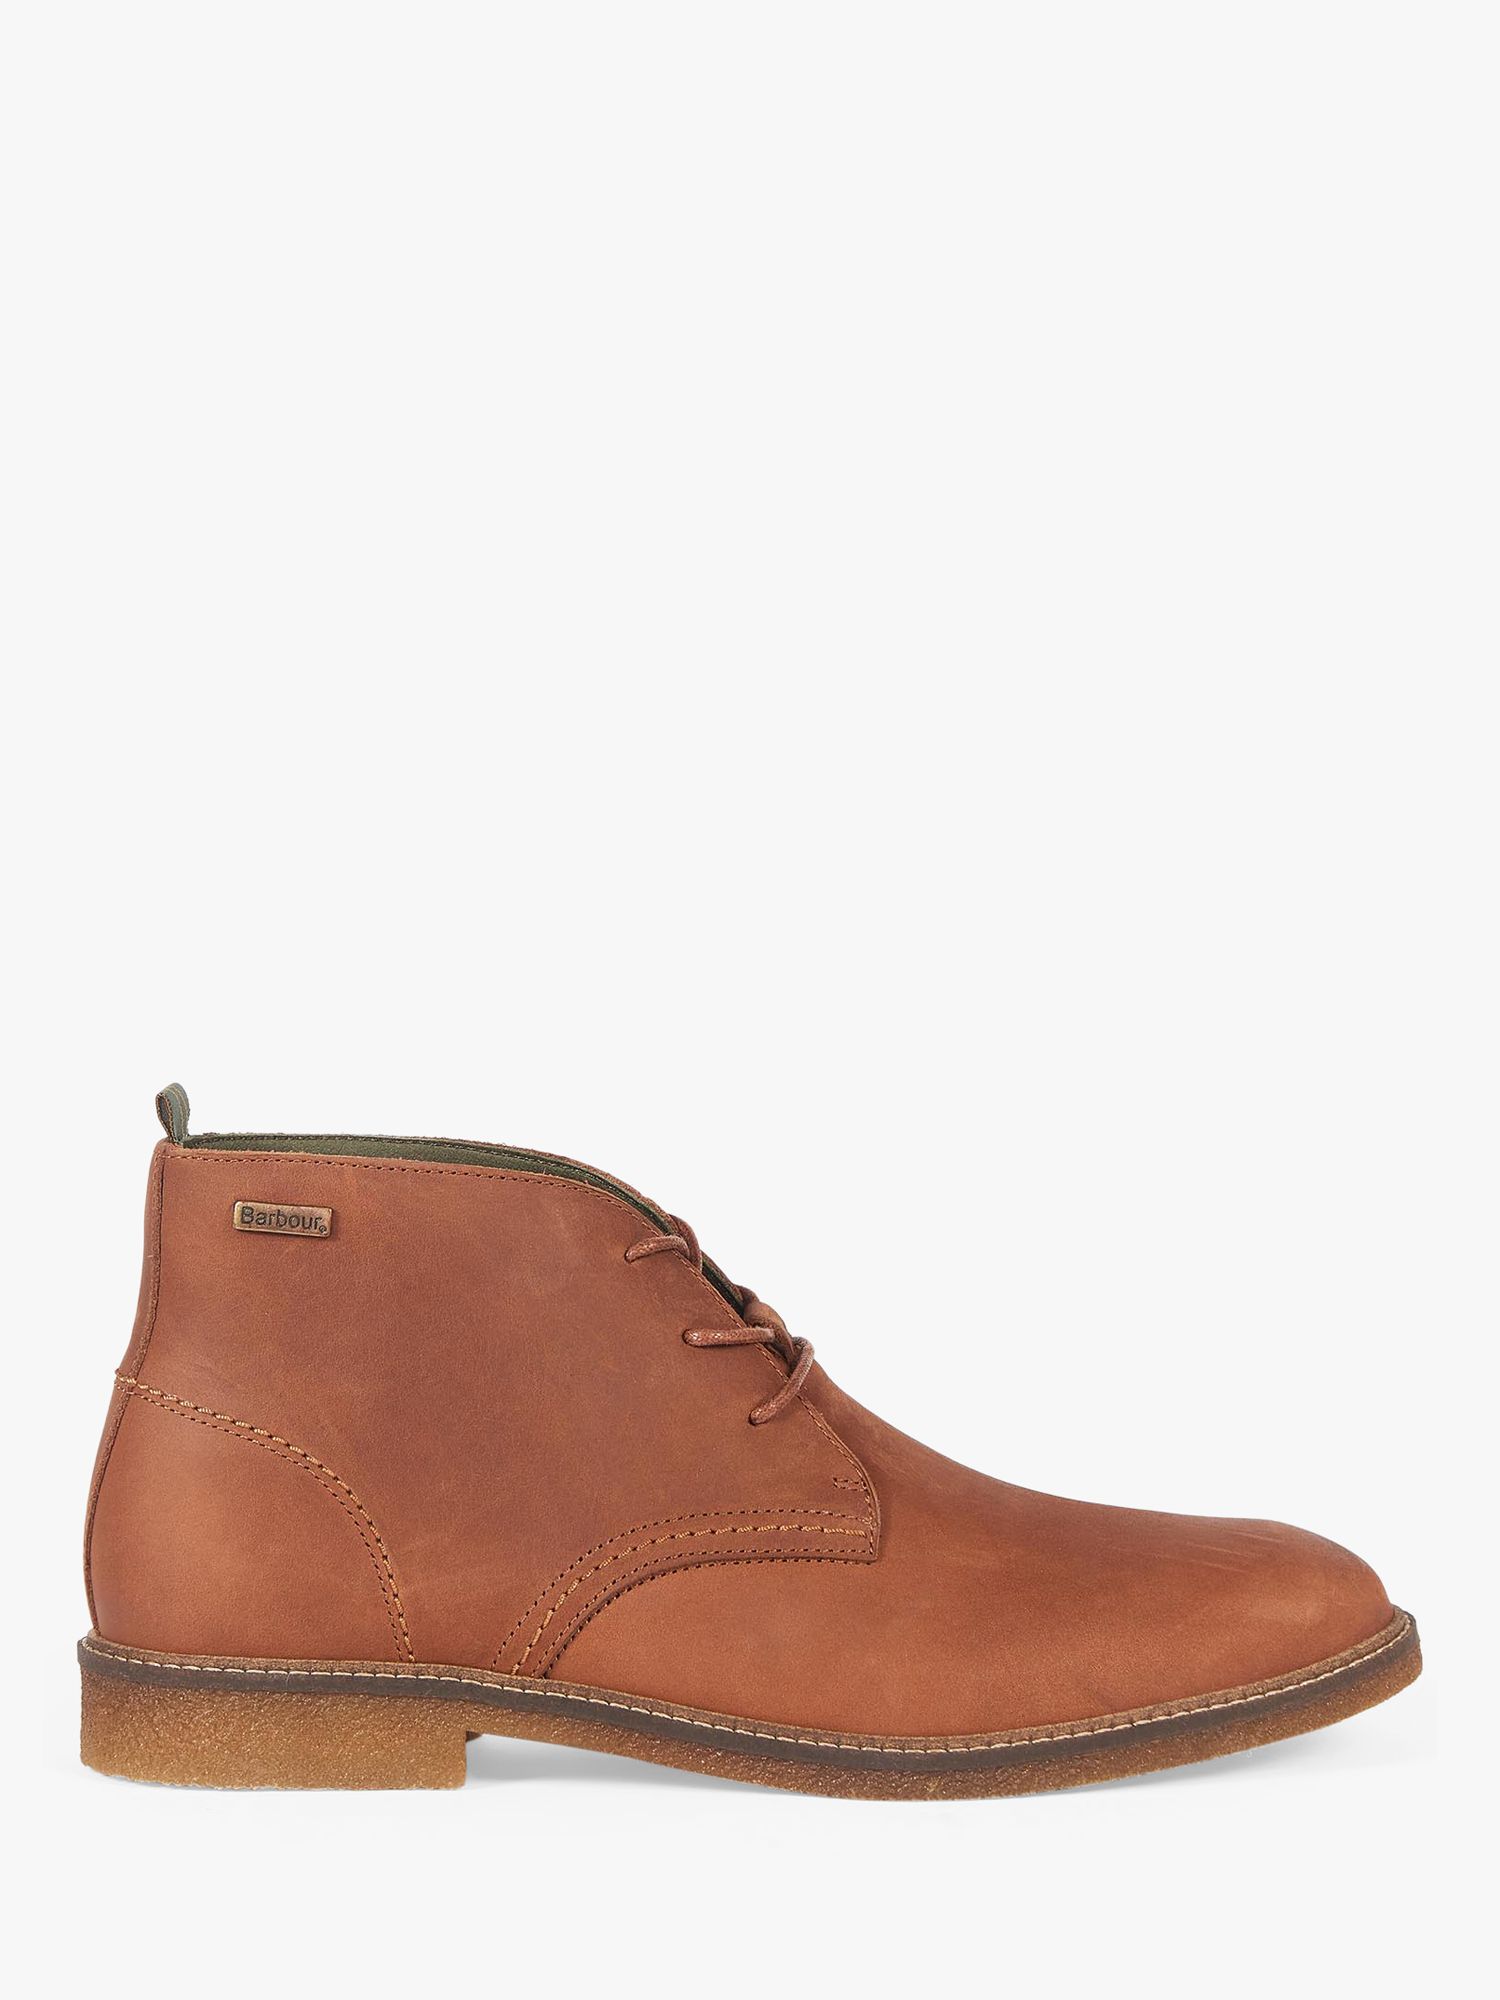 Barbour Sonoran Desert Boots Cognac 10 male Upper: leather, Lining: cotton/microfibre